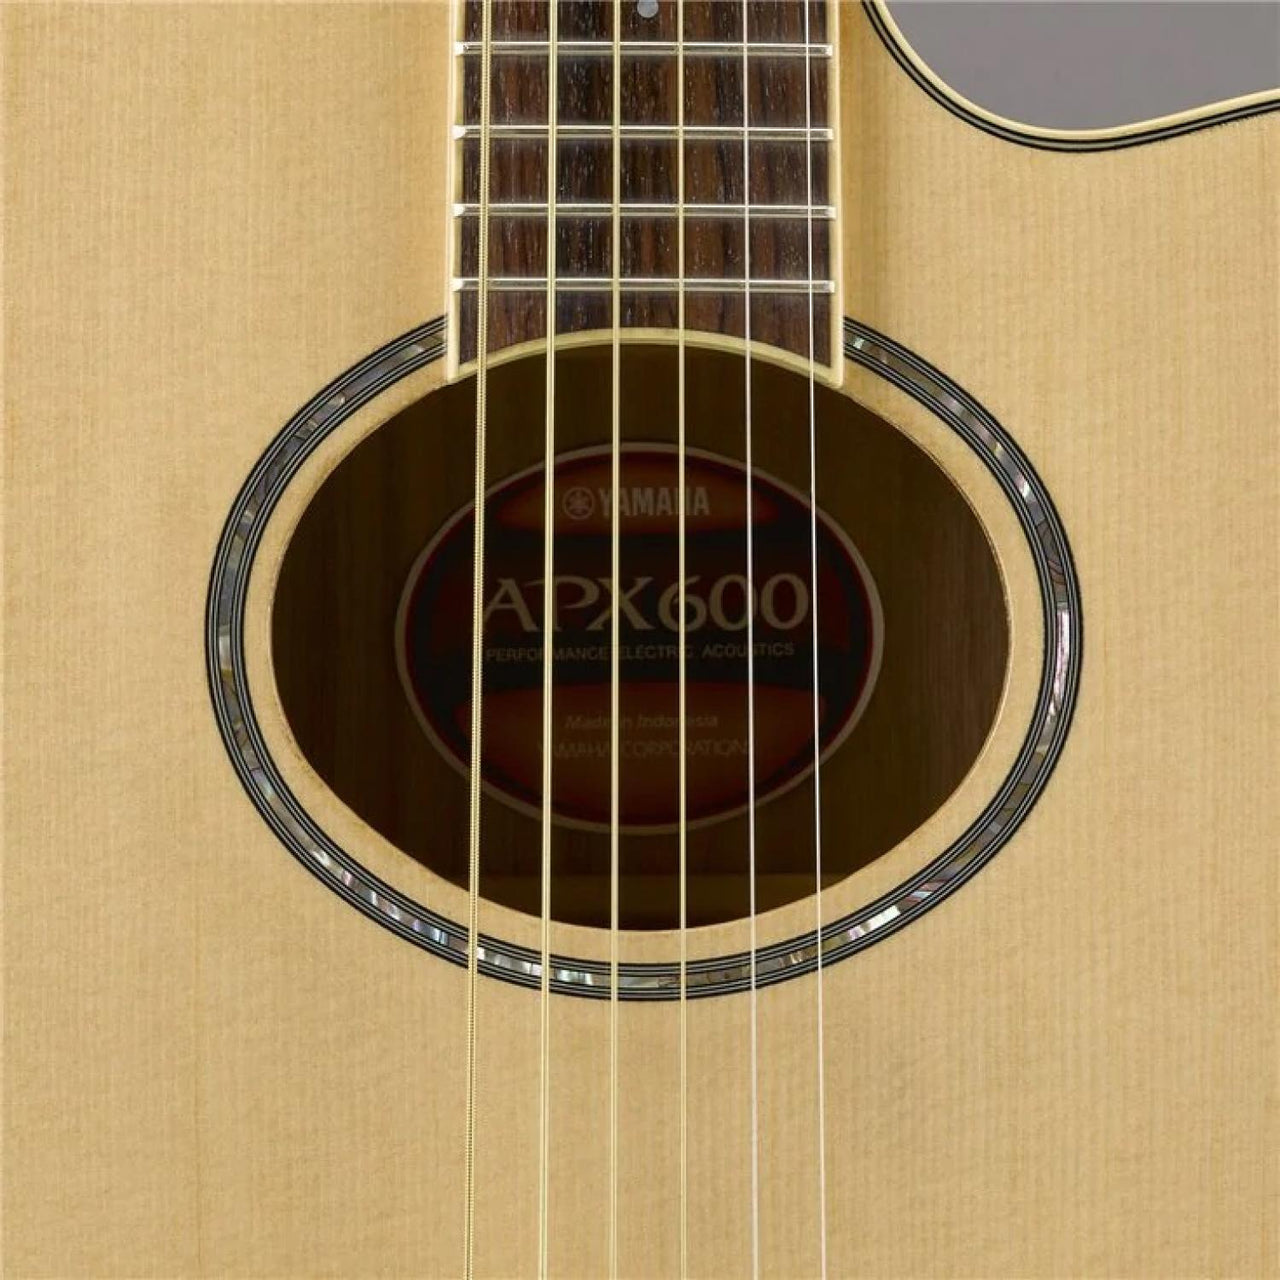 Guitarra Electroacustica Yamaha Apx Natural, Apx600nt